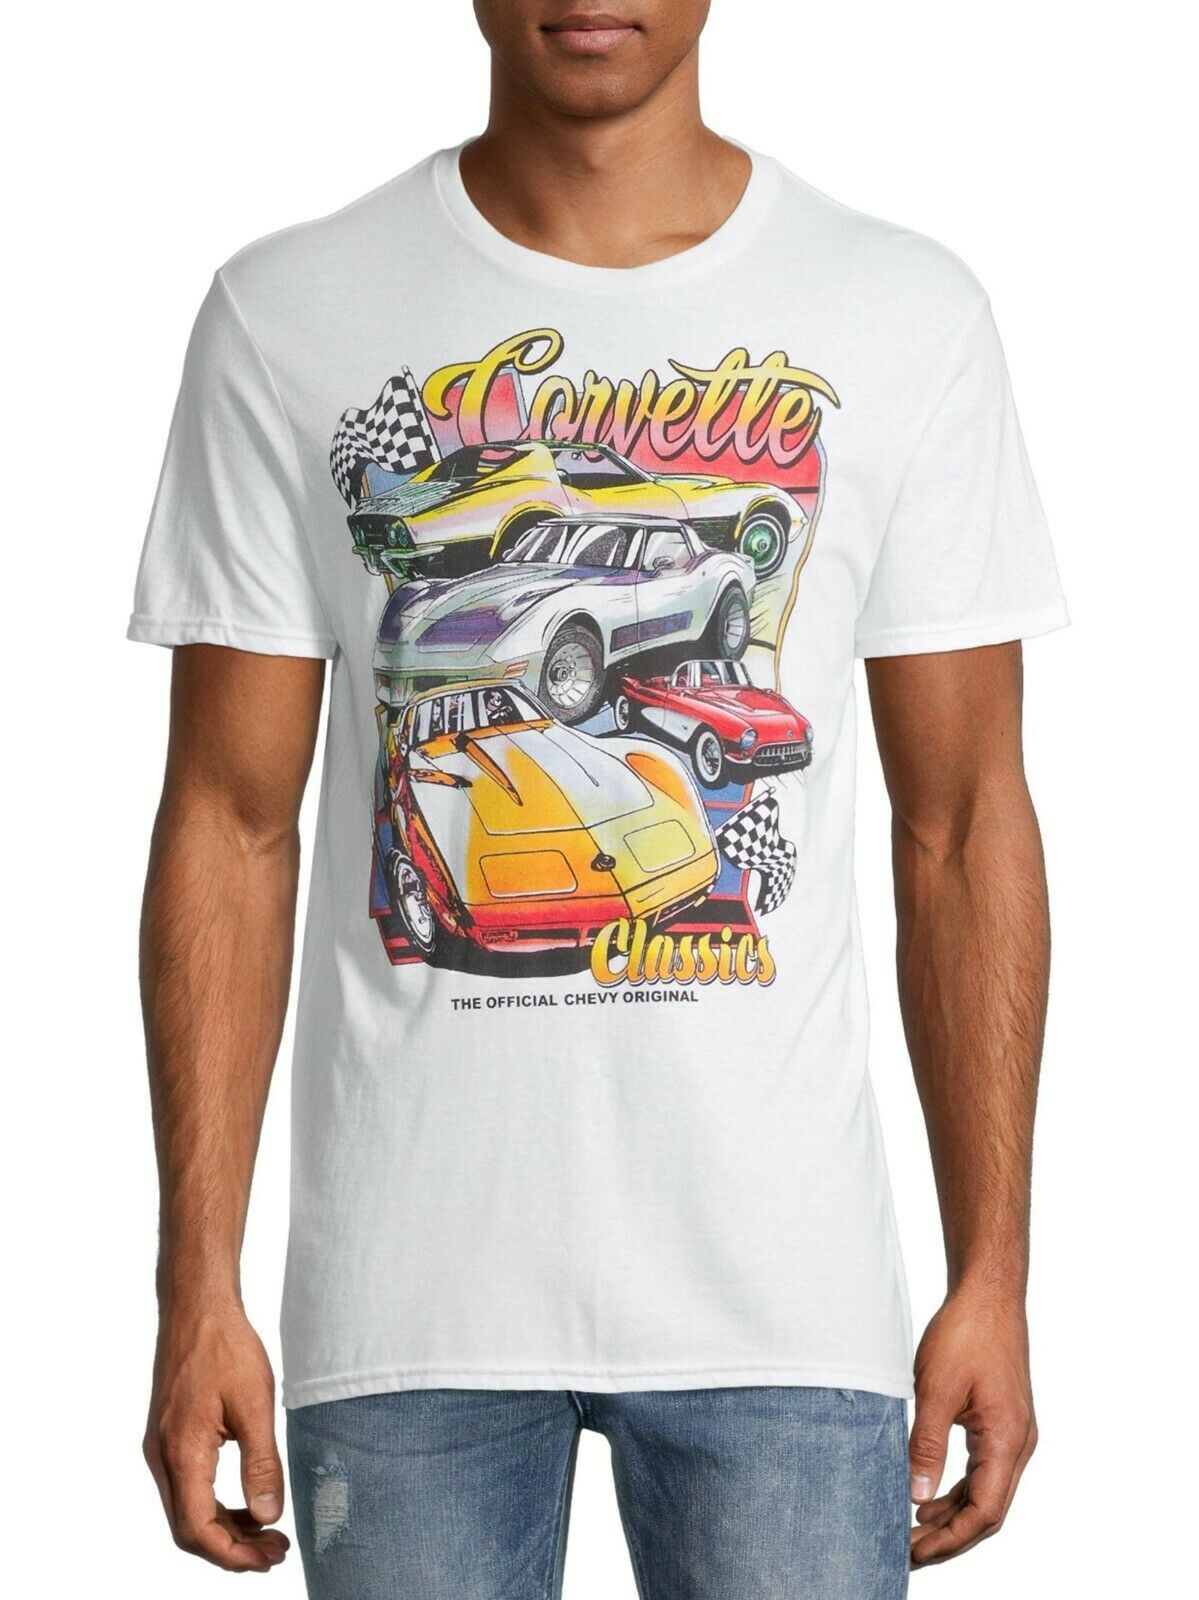 Men's White Chevrolet Corvette Chevy Graphic Tee T-Shirt